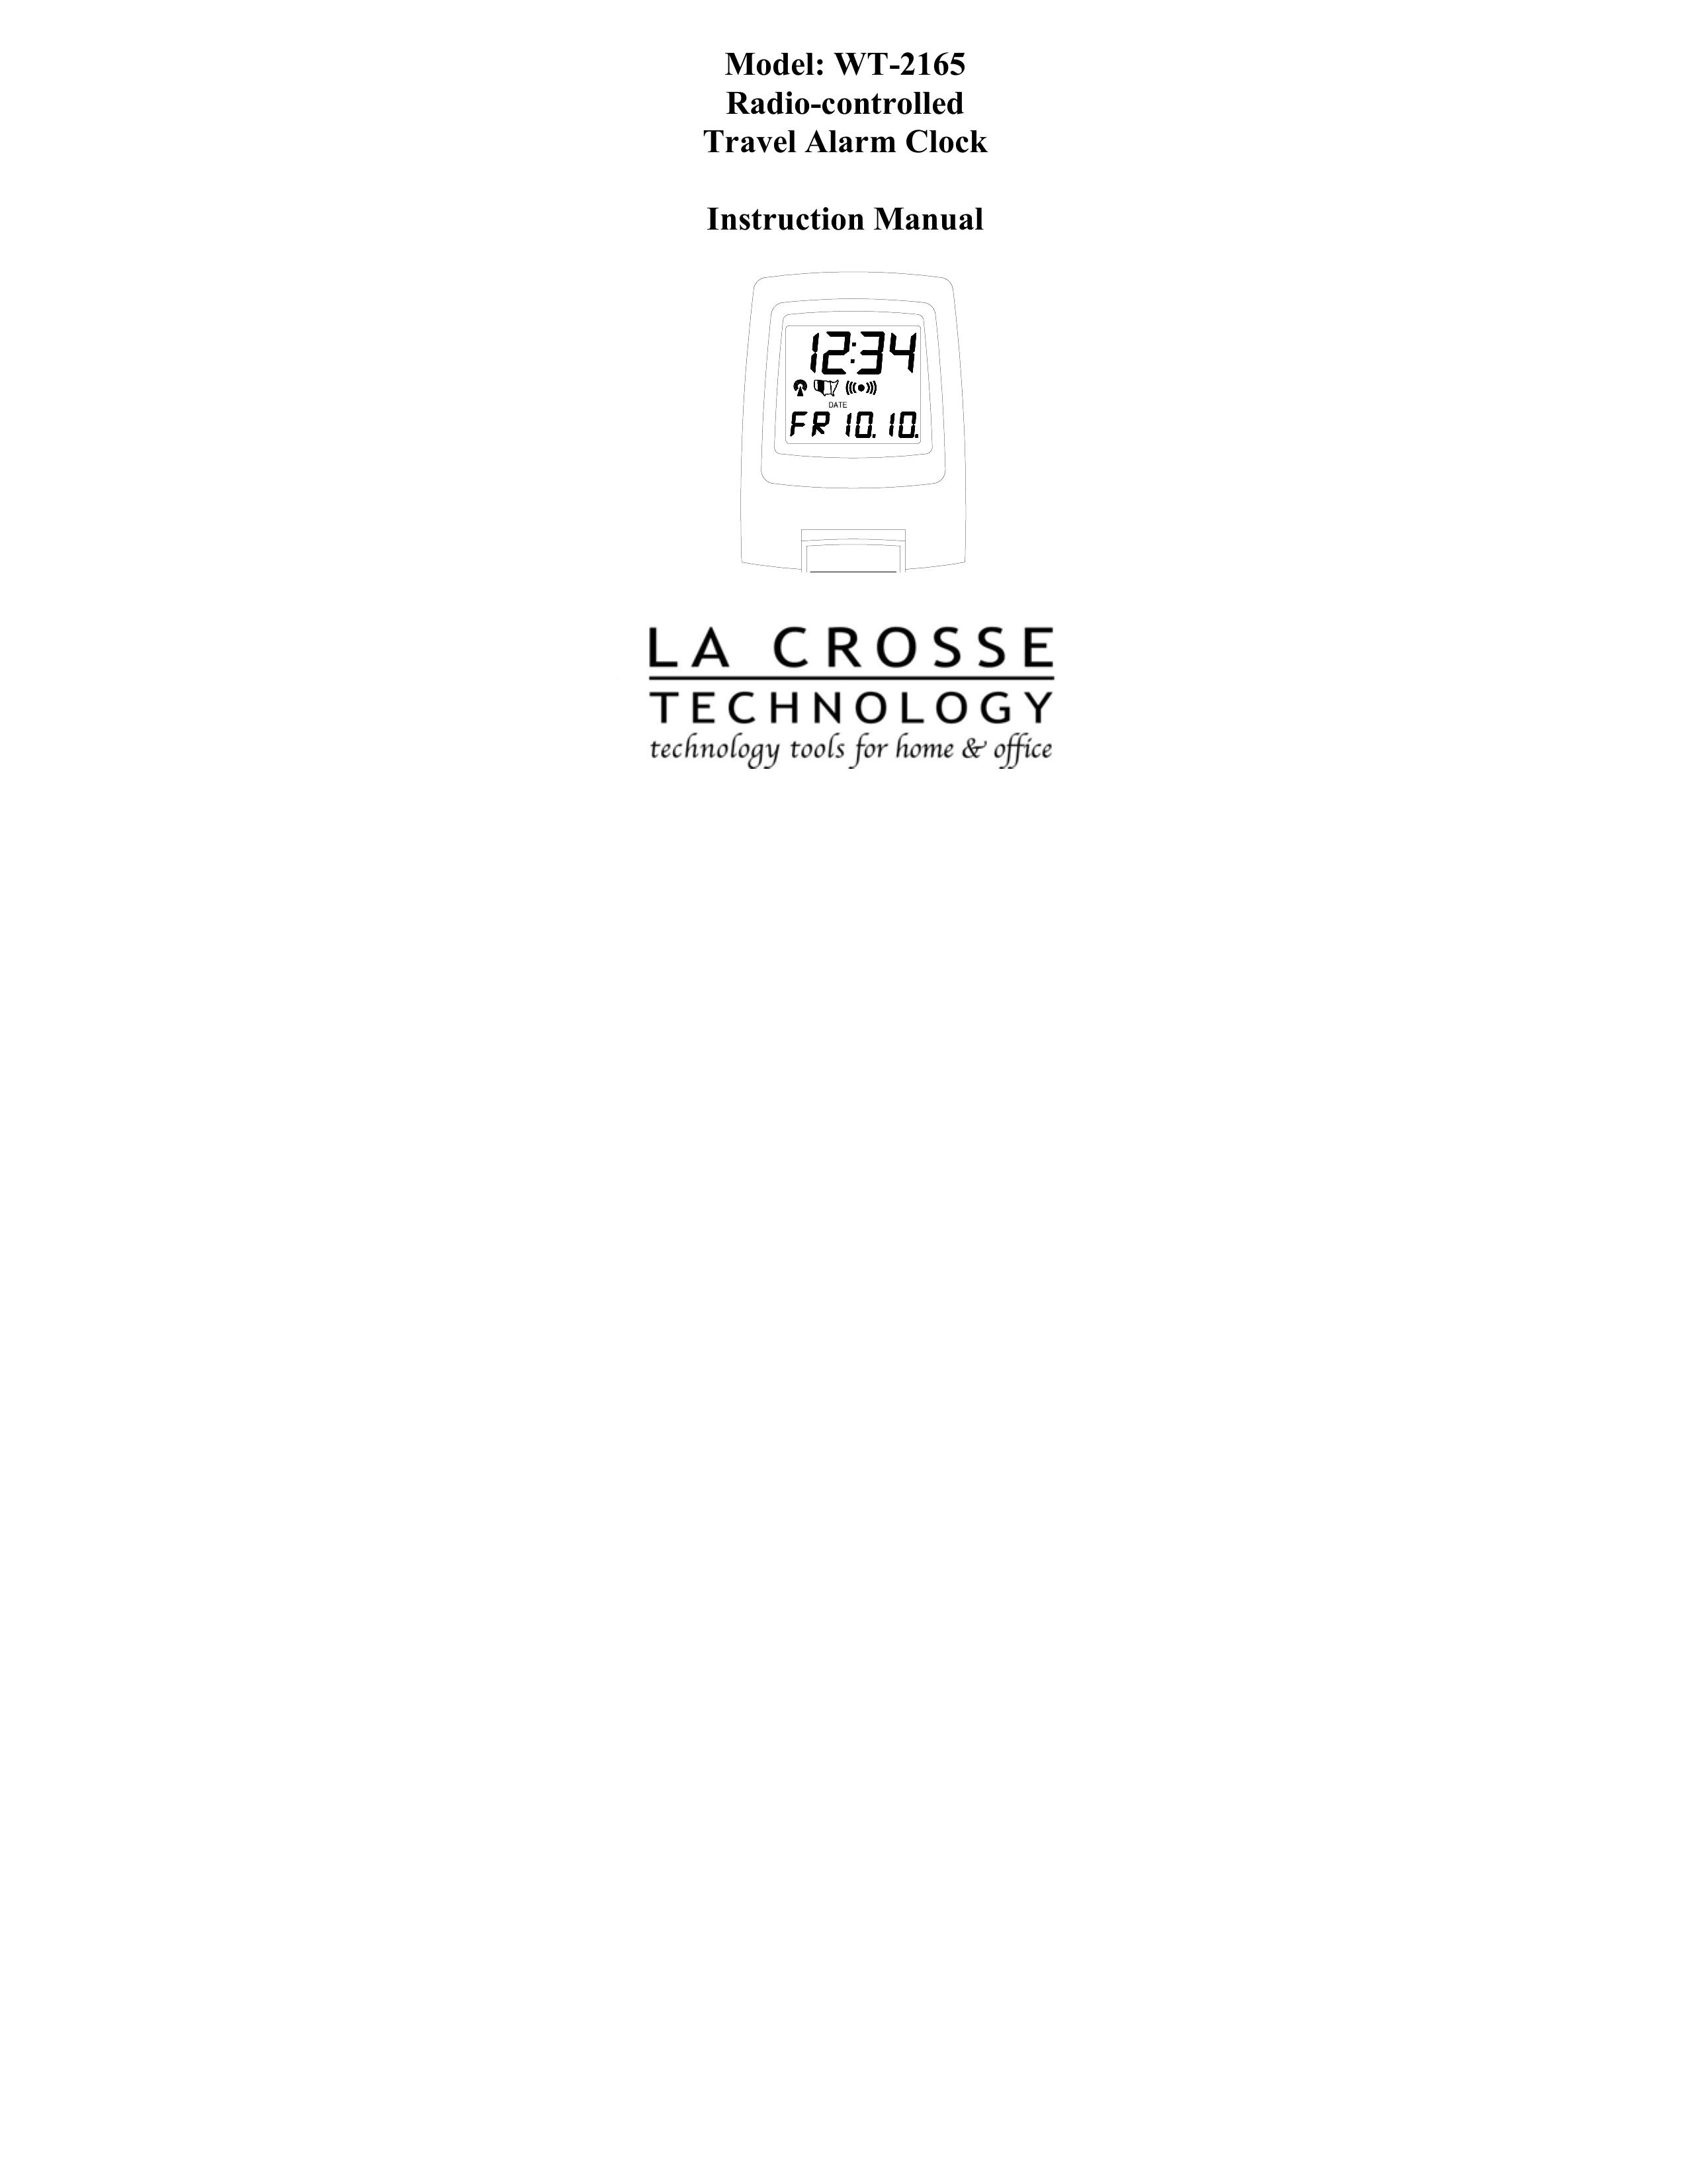 La Crosse Technology WT-2165 Clock Radio User Manual